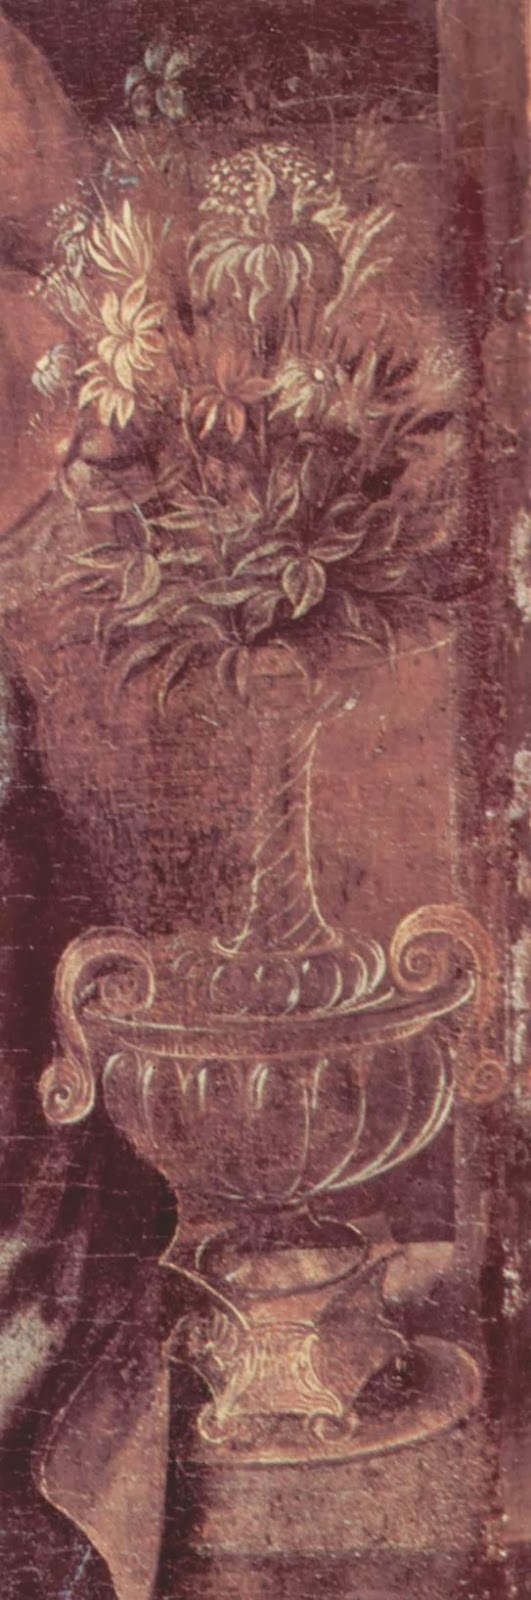 Leonardo+da+Vinci-1452-1519 (291).jpg